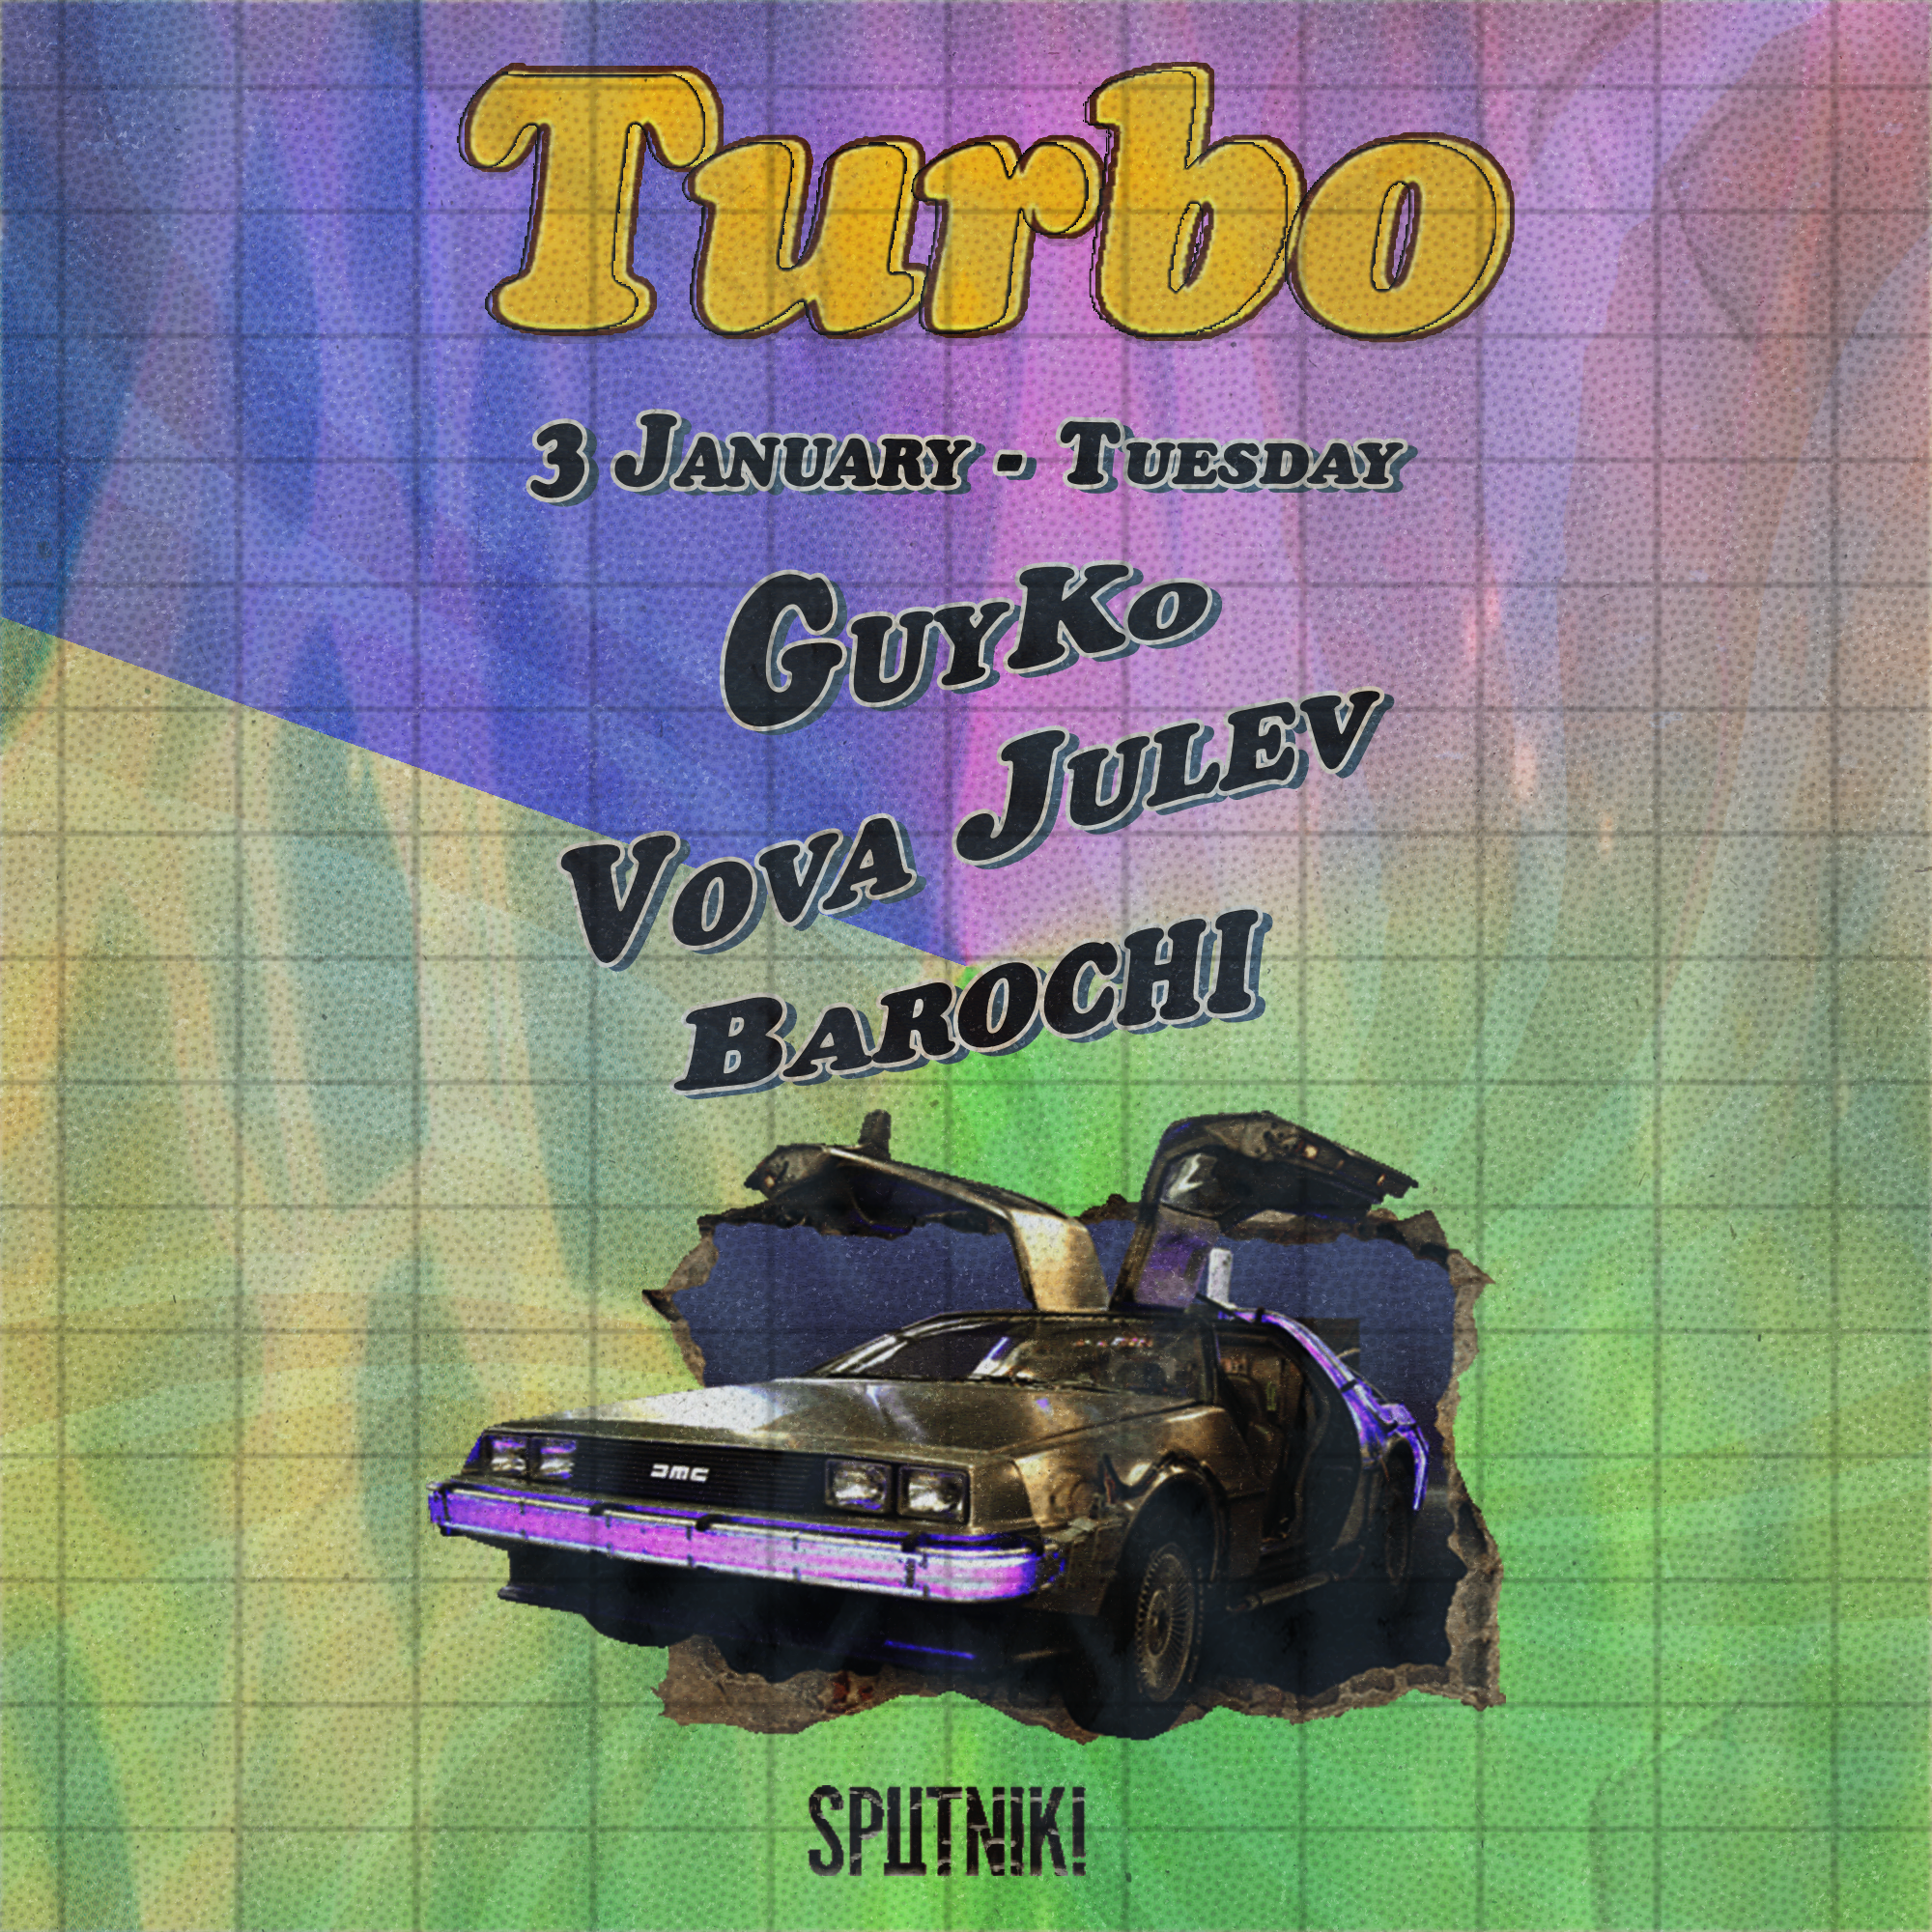 Turbo Groove presents: GuyKO / Vova Julev / Barochi - フライヤー表